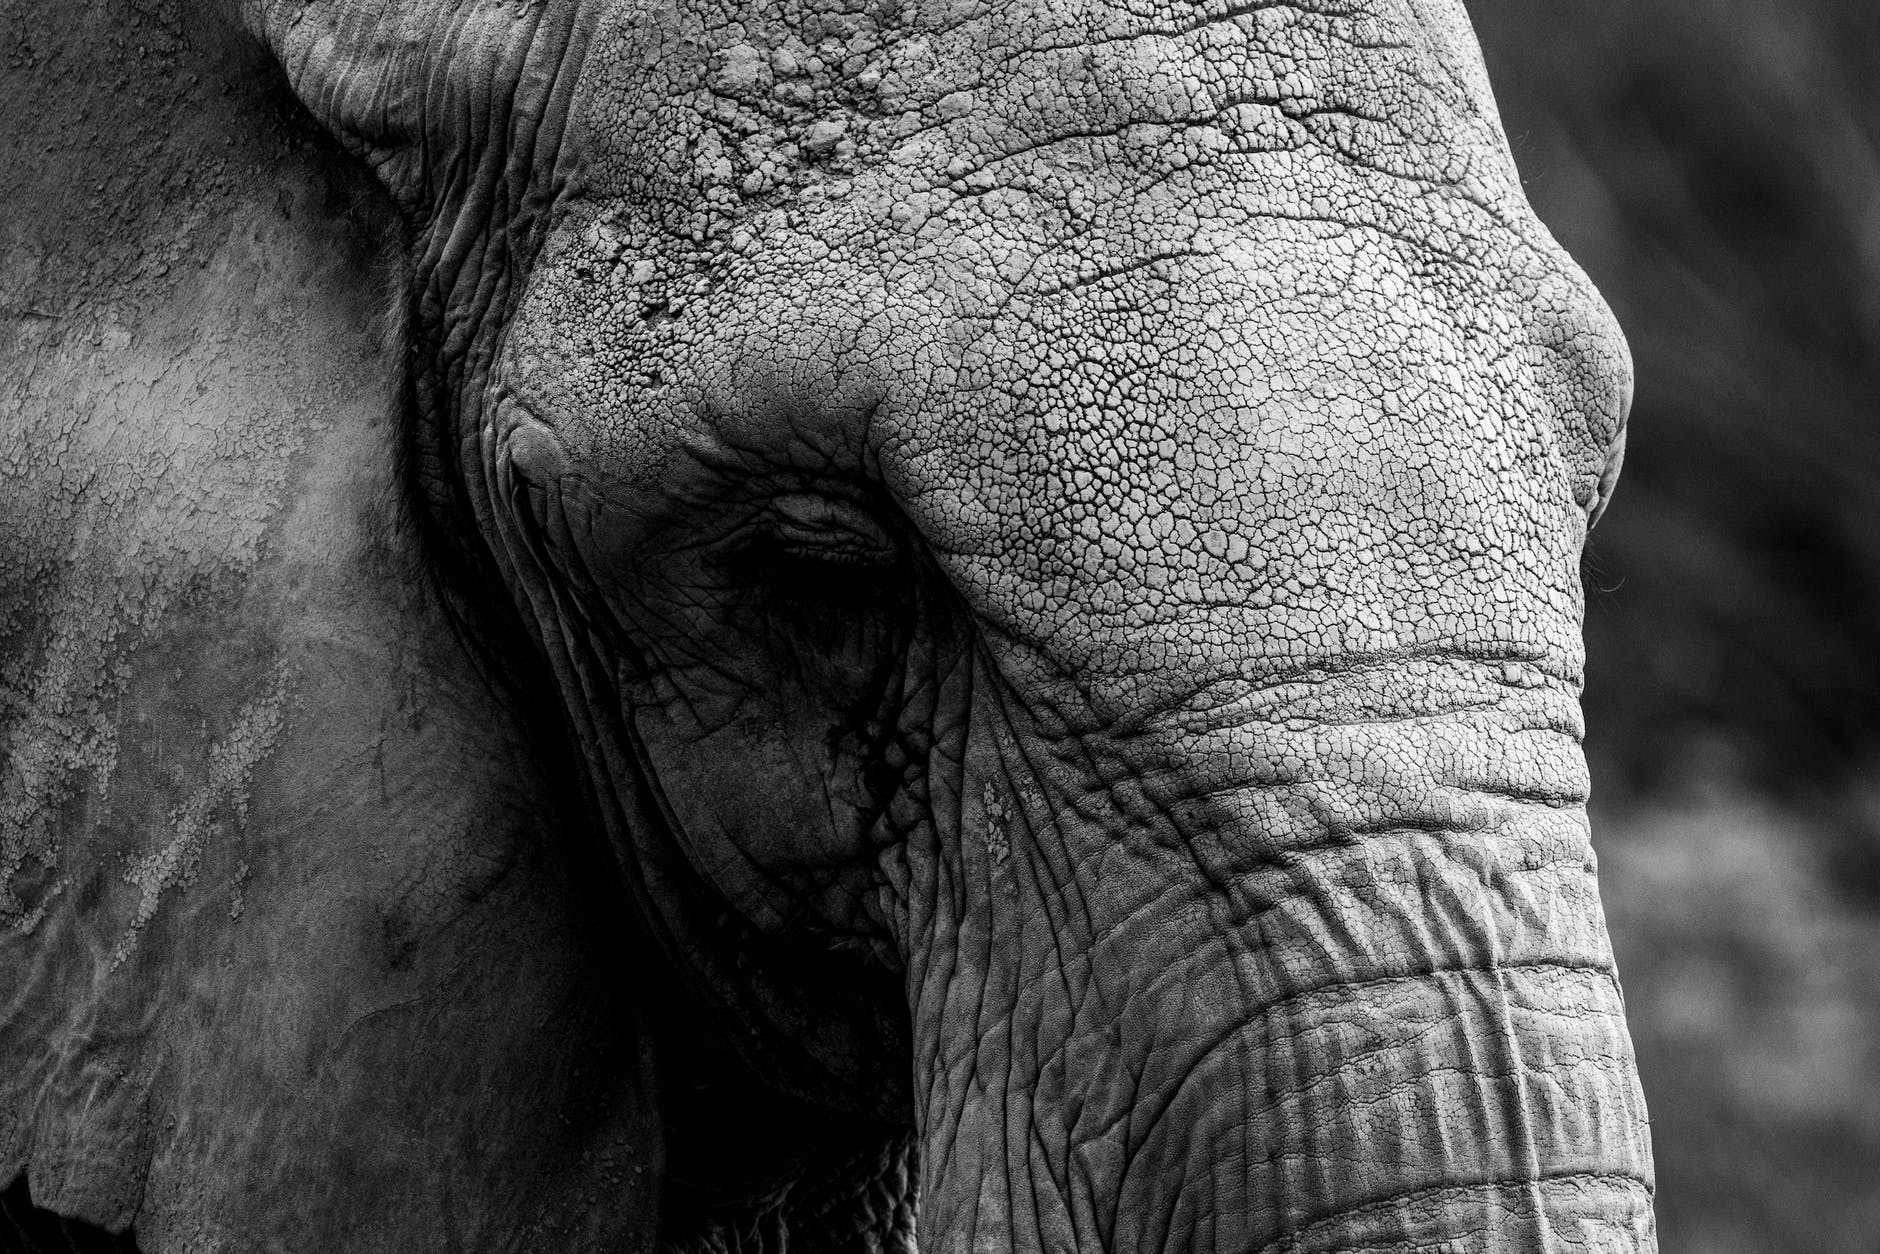 grayscale photo of an elephant